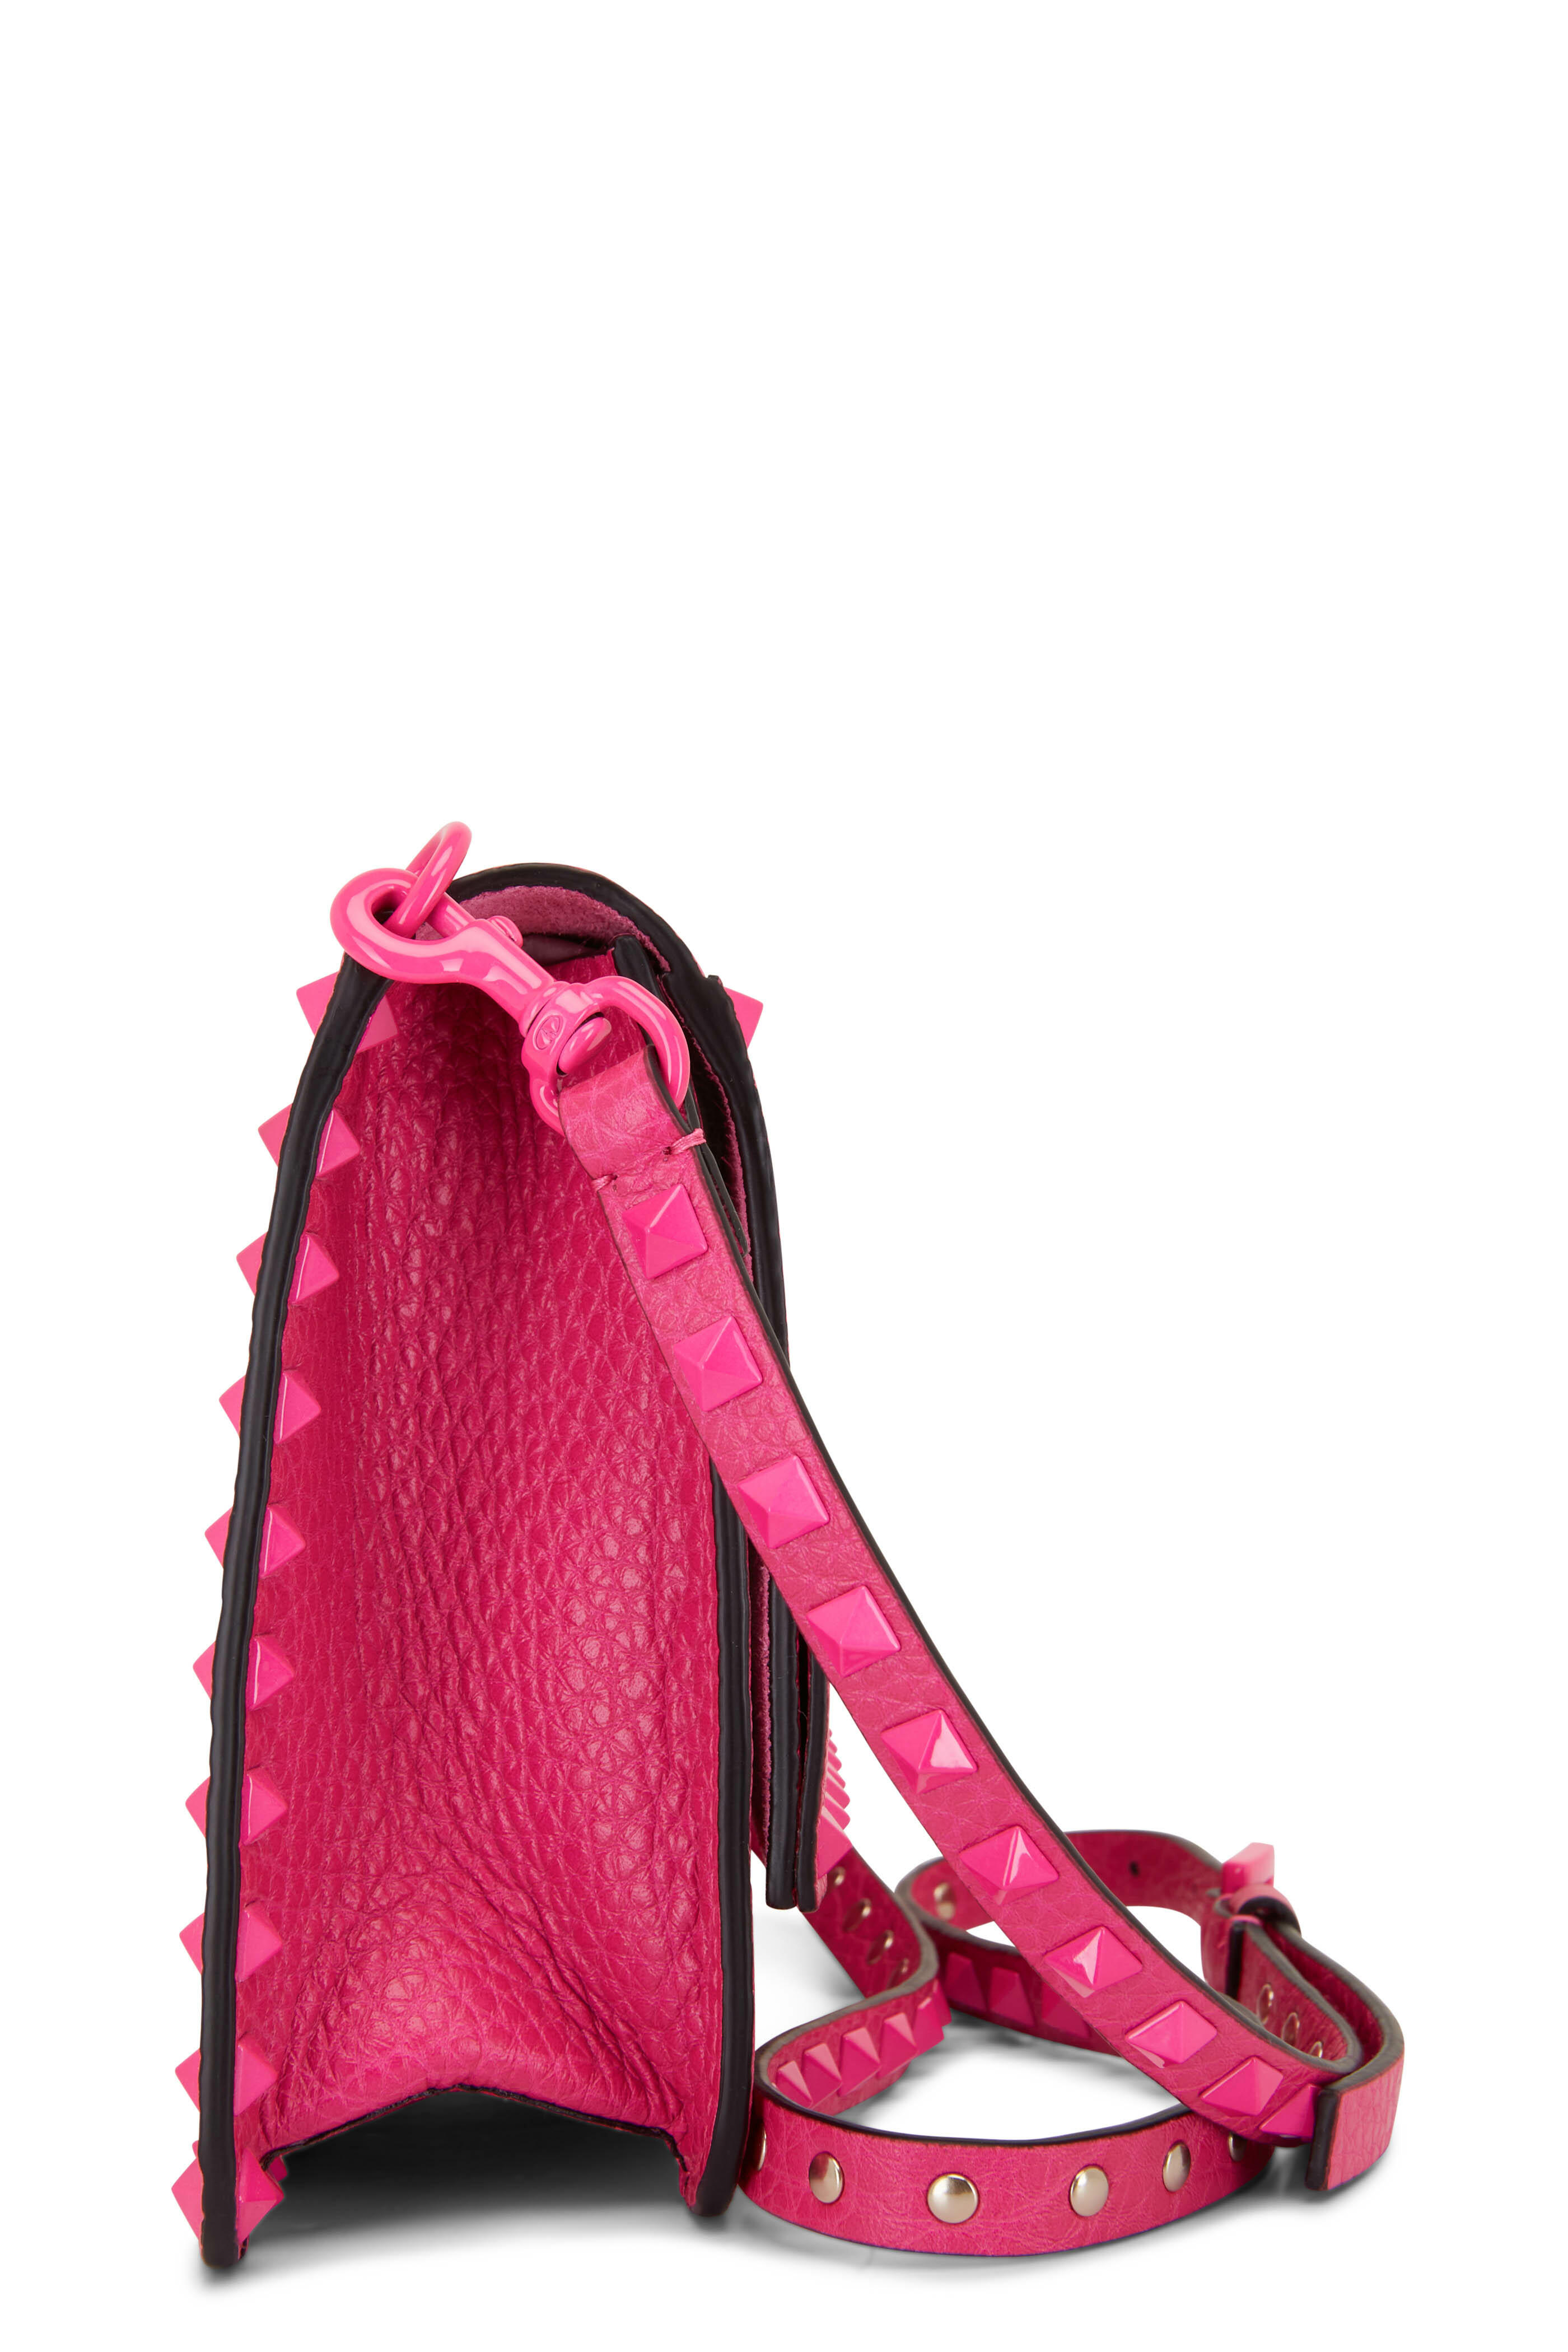 Valentino Garavani Pink Small Rockstud Bag